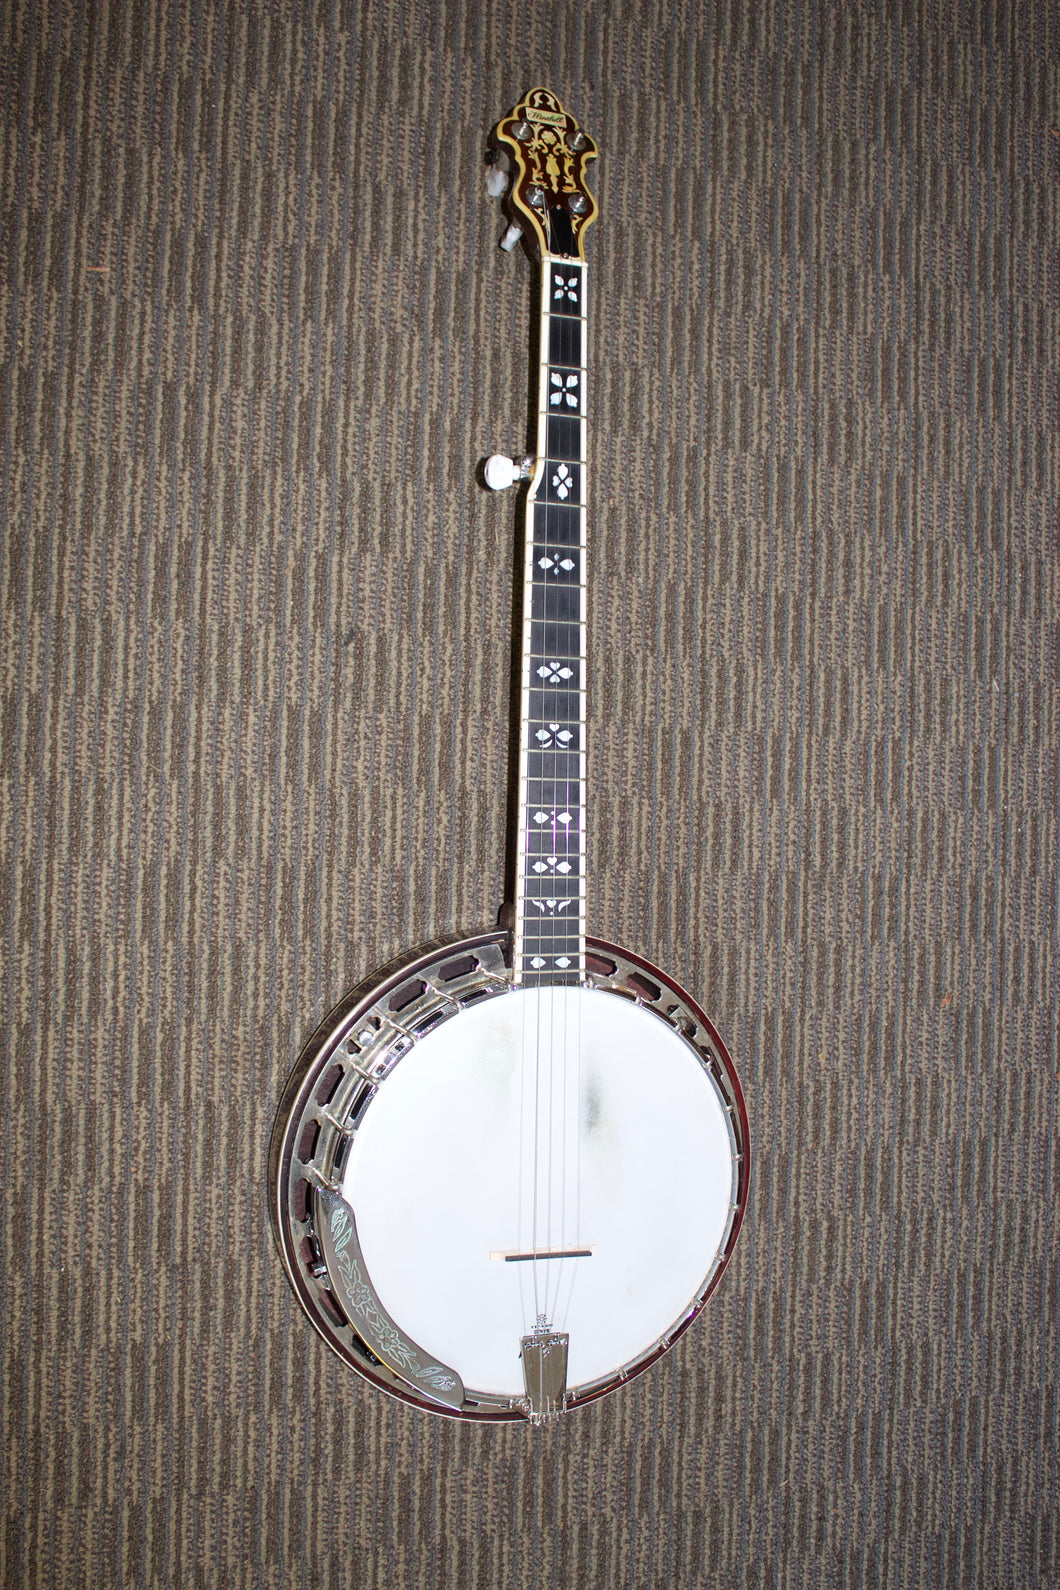 Flinthill FHB280 Banjo - used good!